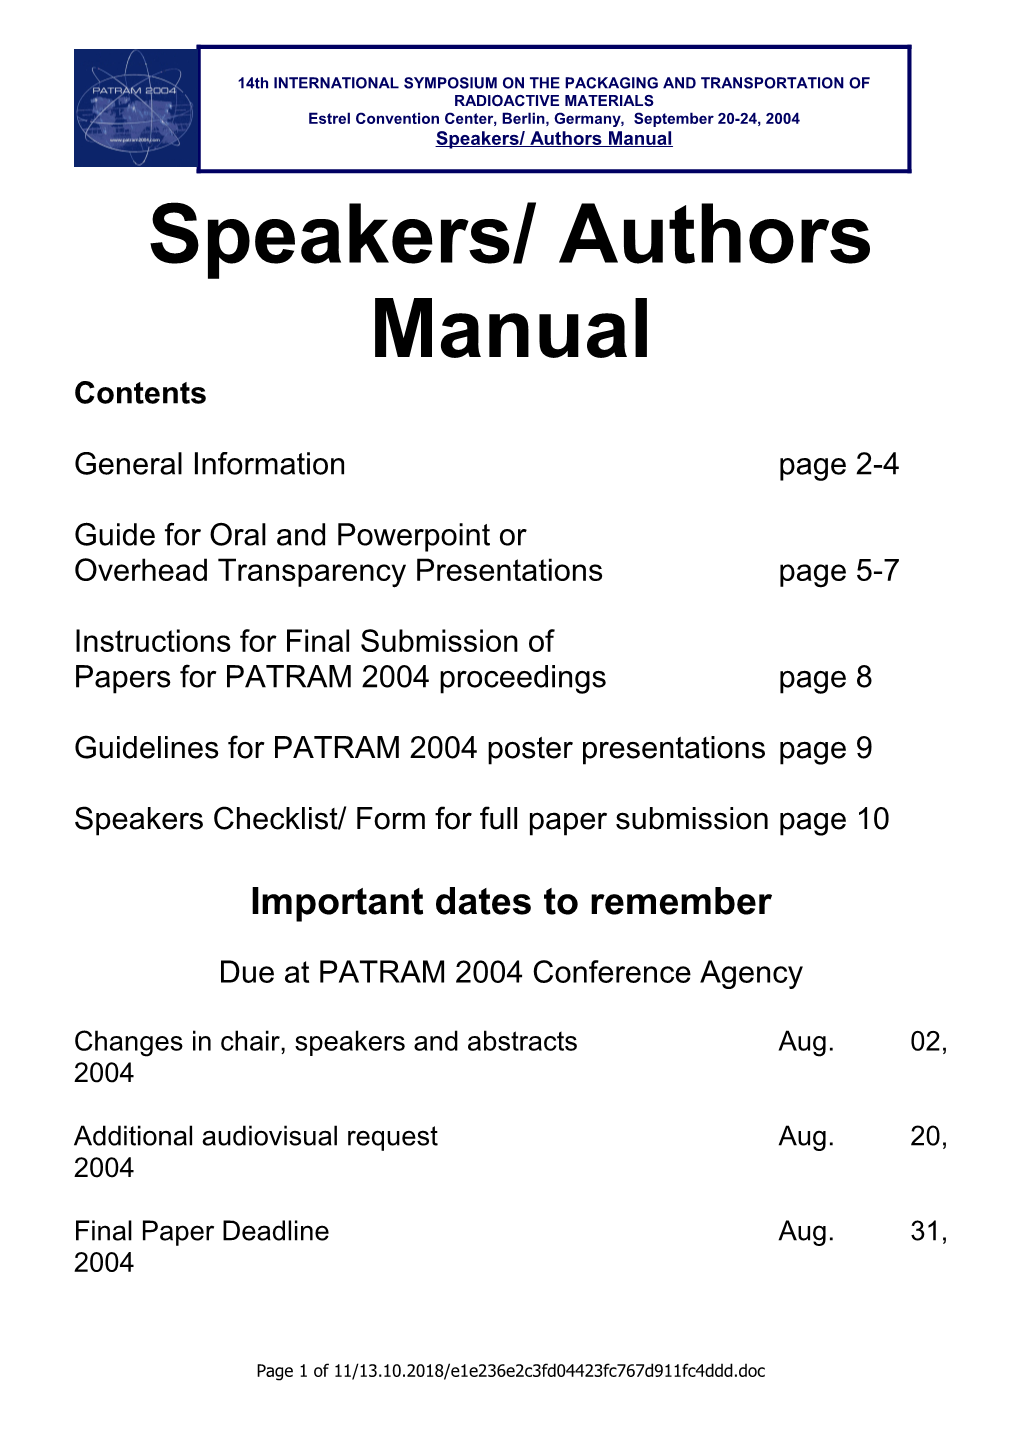 Speakers/ Authors Manual